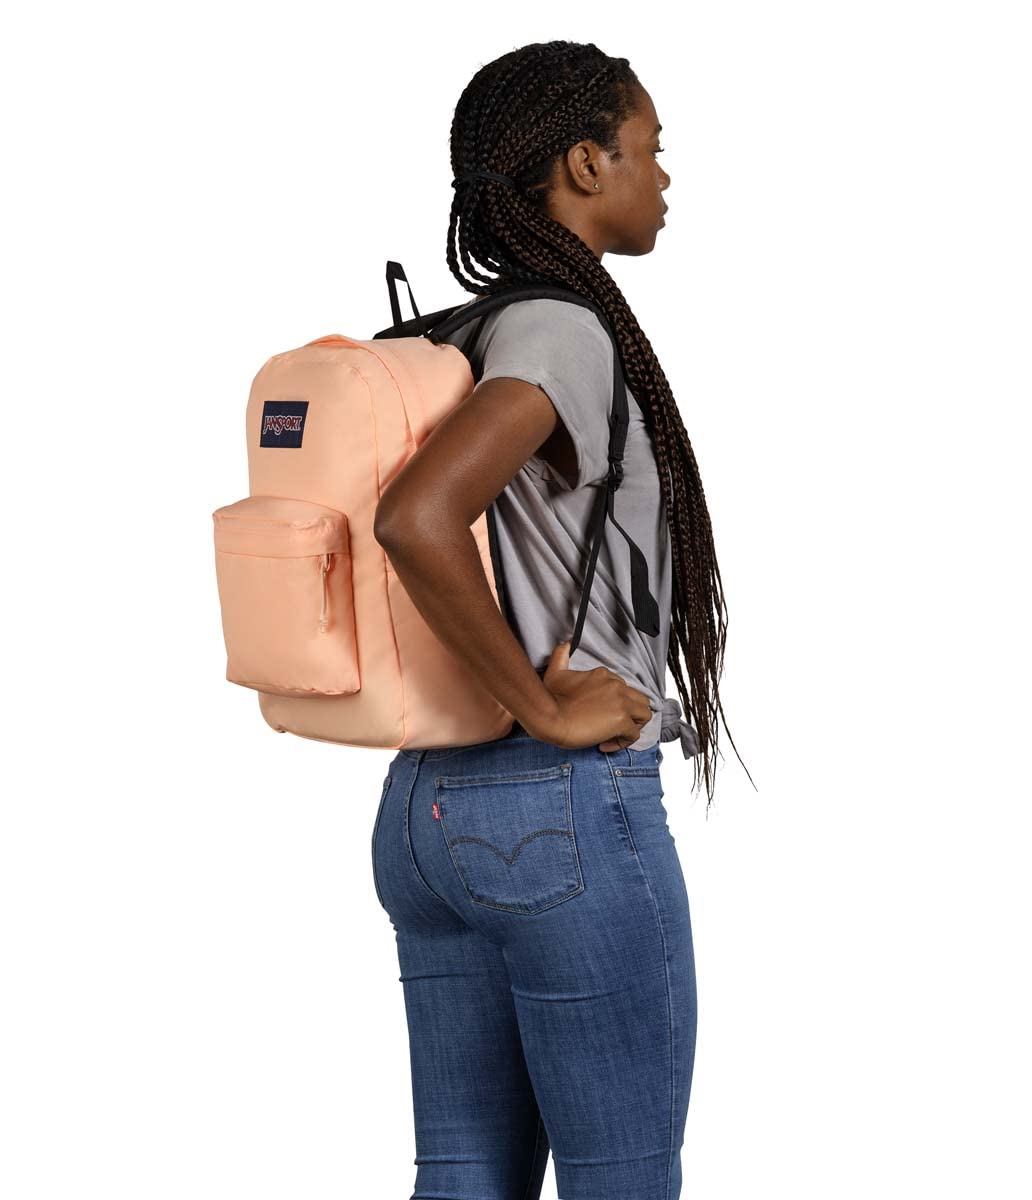 JanSport Superbreak Plus Backpack - Work, Travel, or Laptop Bookbag with Water Bottle Pocket, Peach Neon